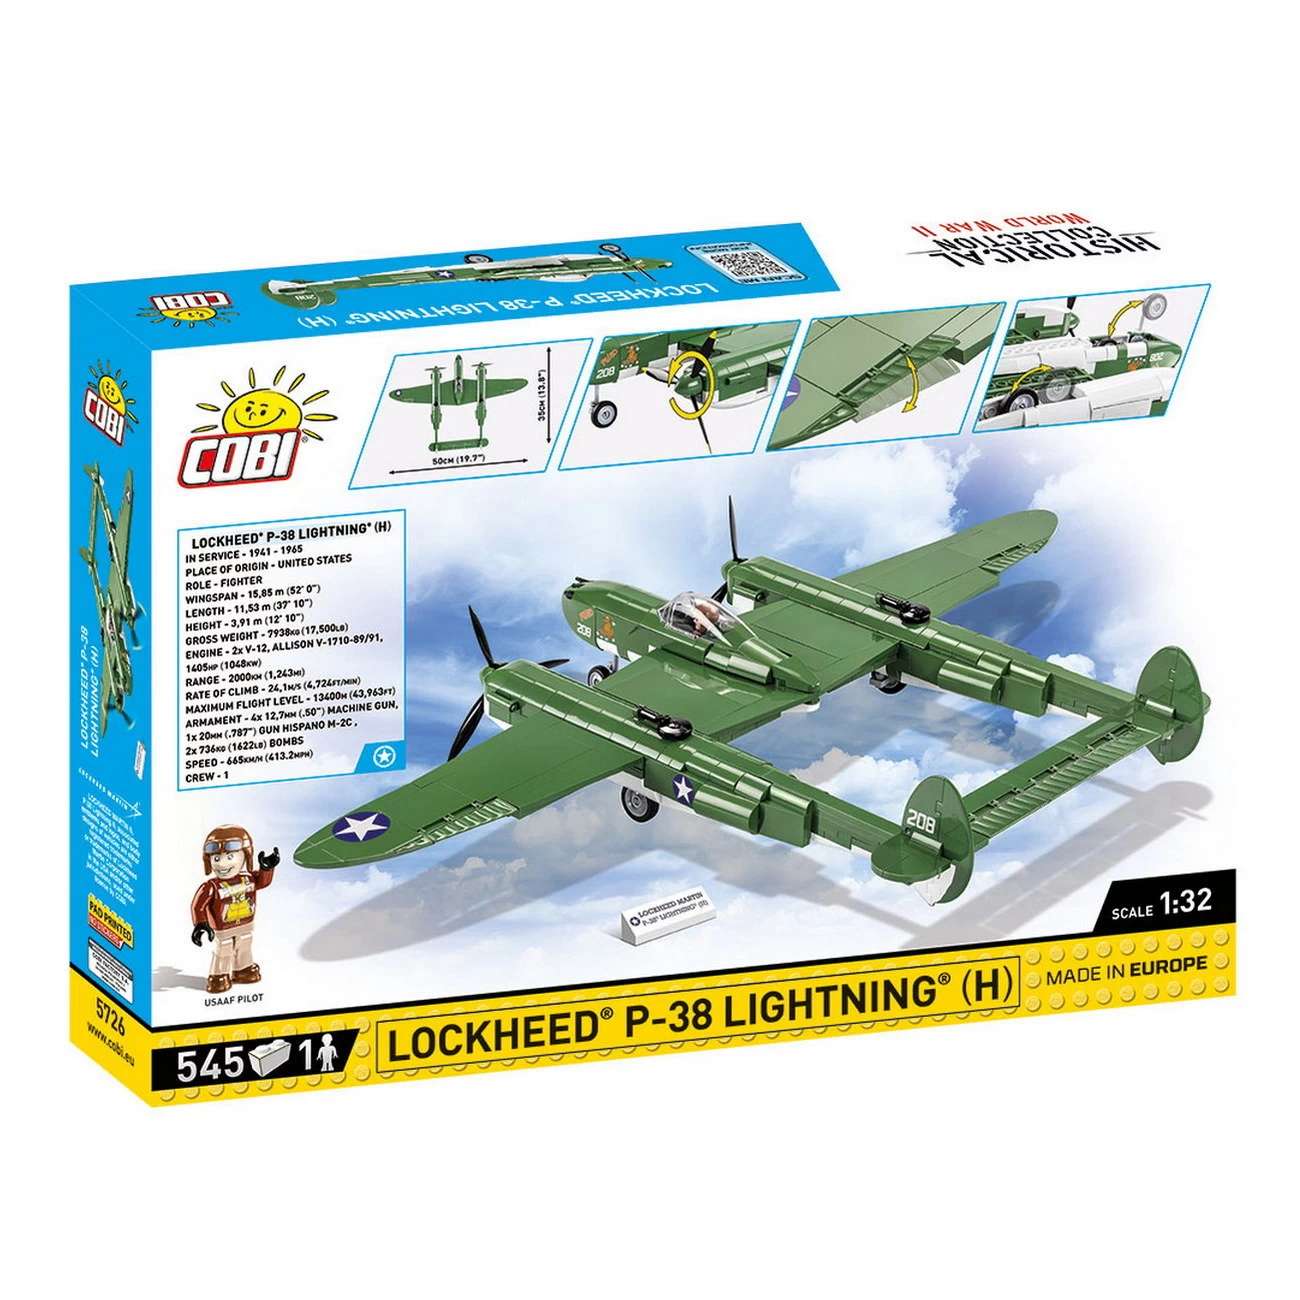 COBI - Lockheed P-38H Lightning (5726) - Bausteine kaufen